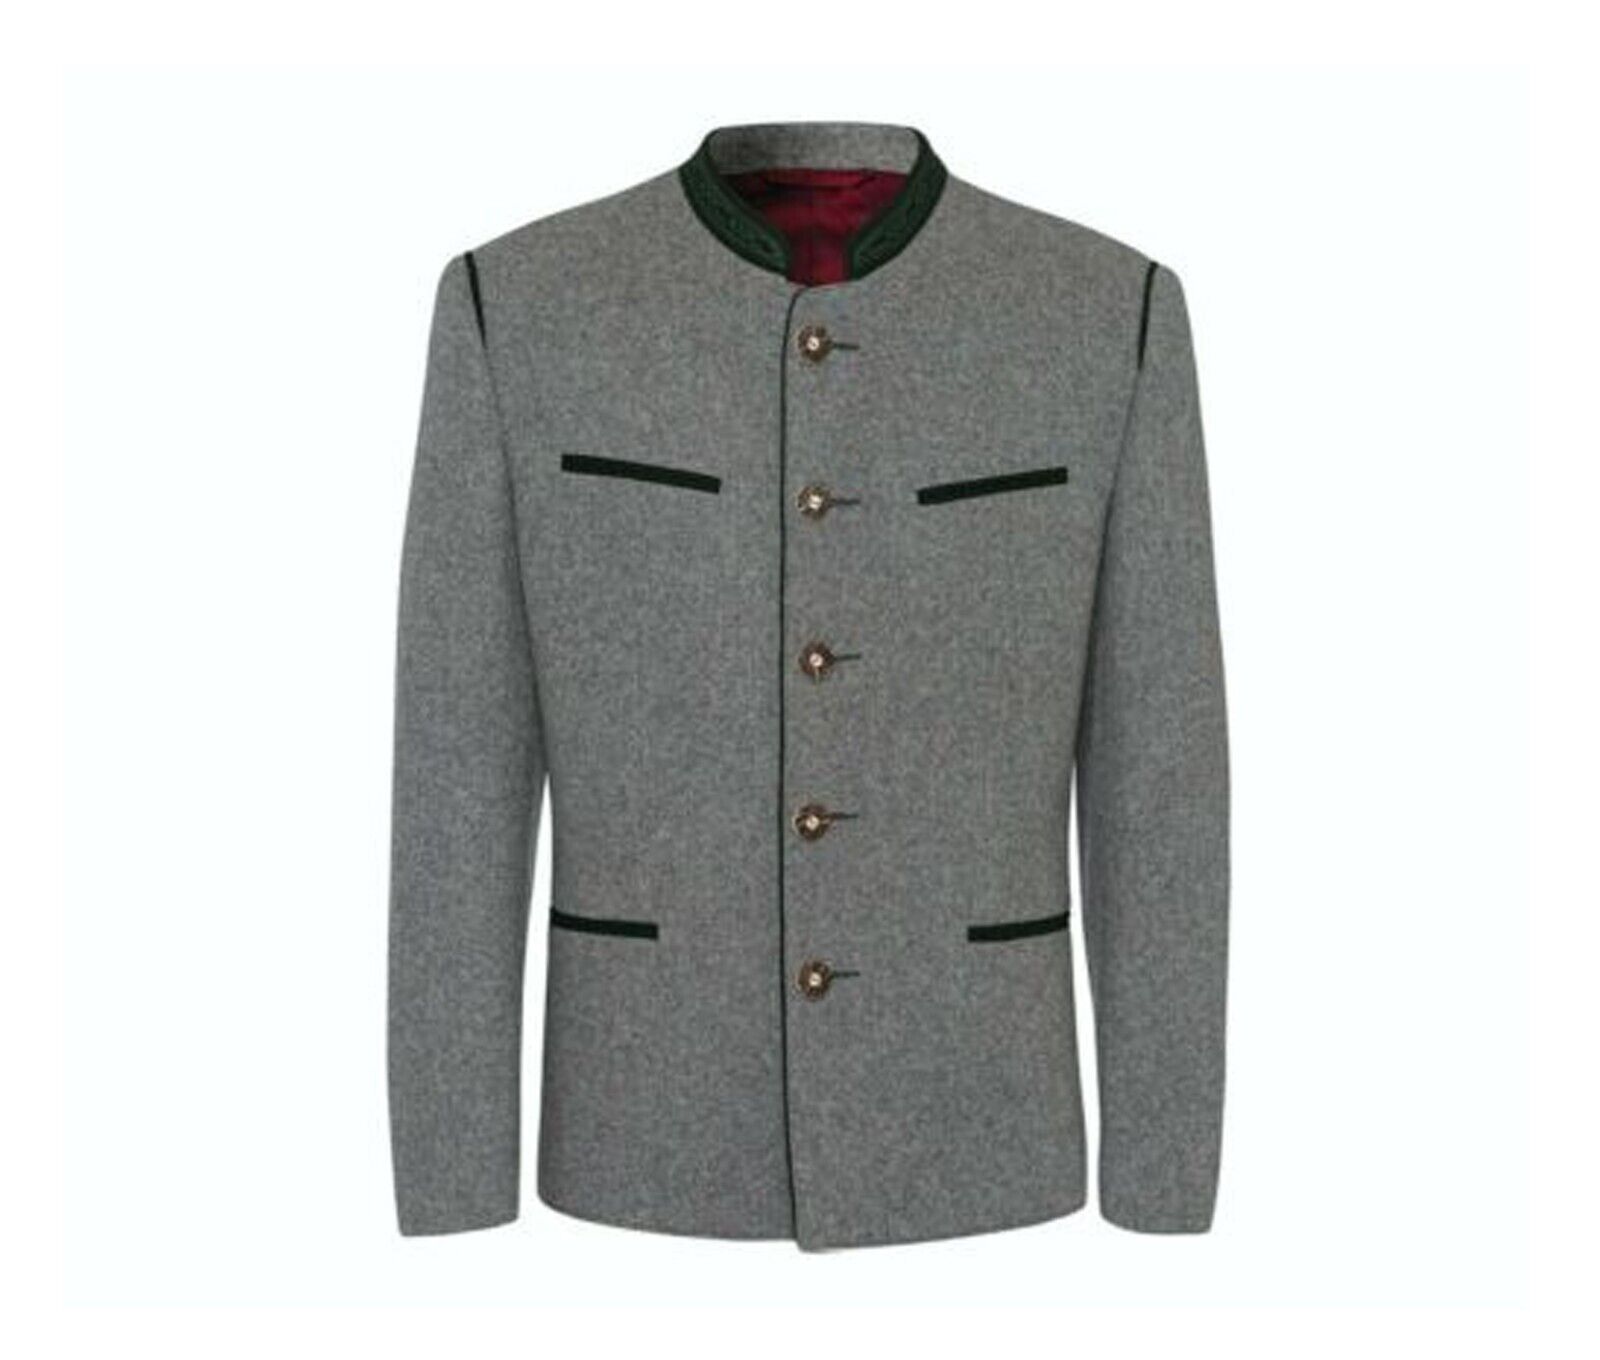 German Bavarian Jacket Austrian Traditional Tyrol Loden Blazer Wool Jacket Gray